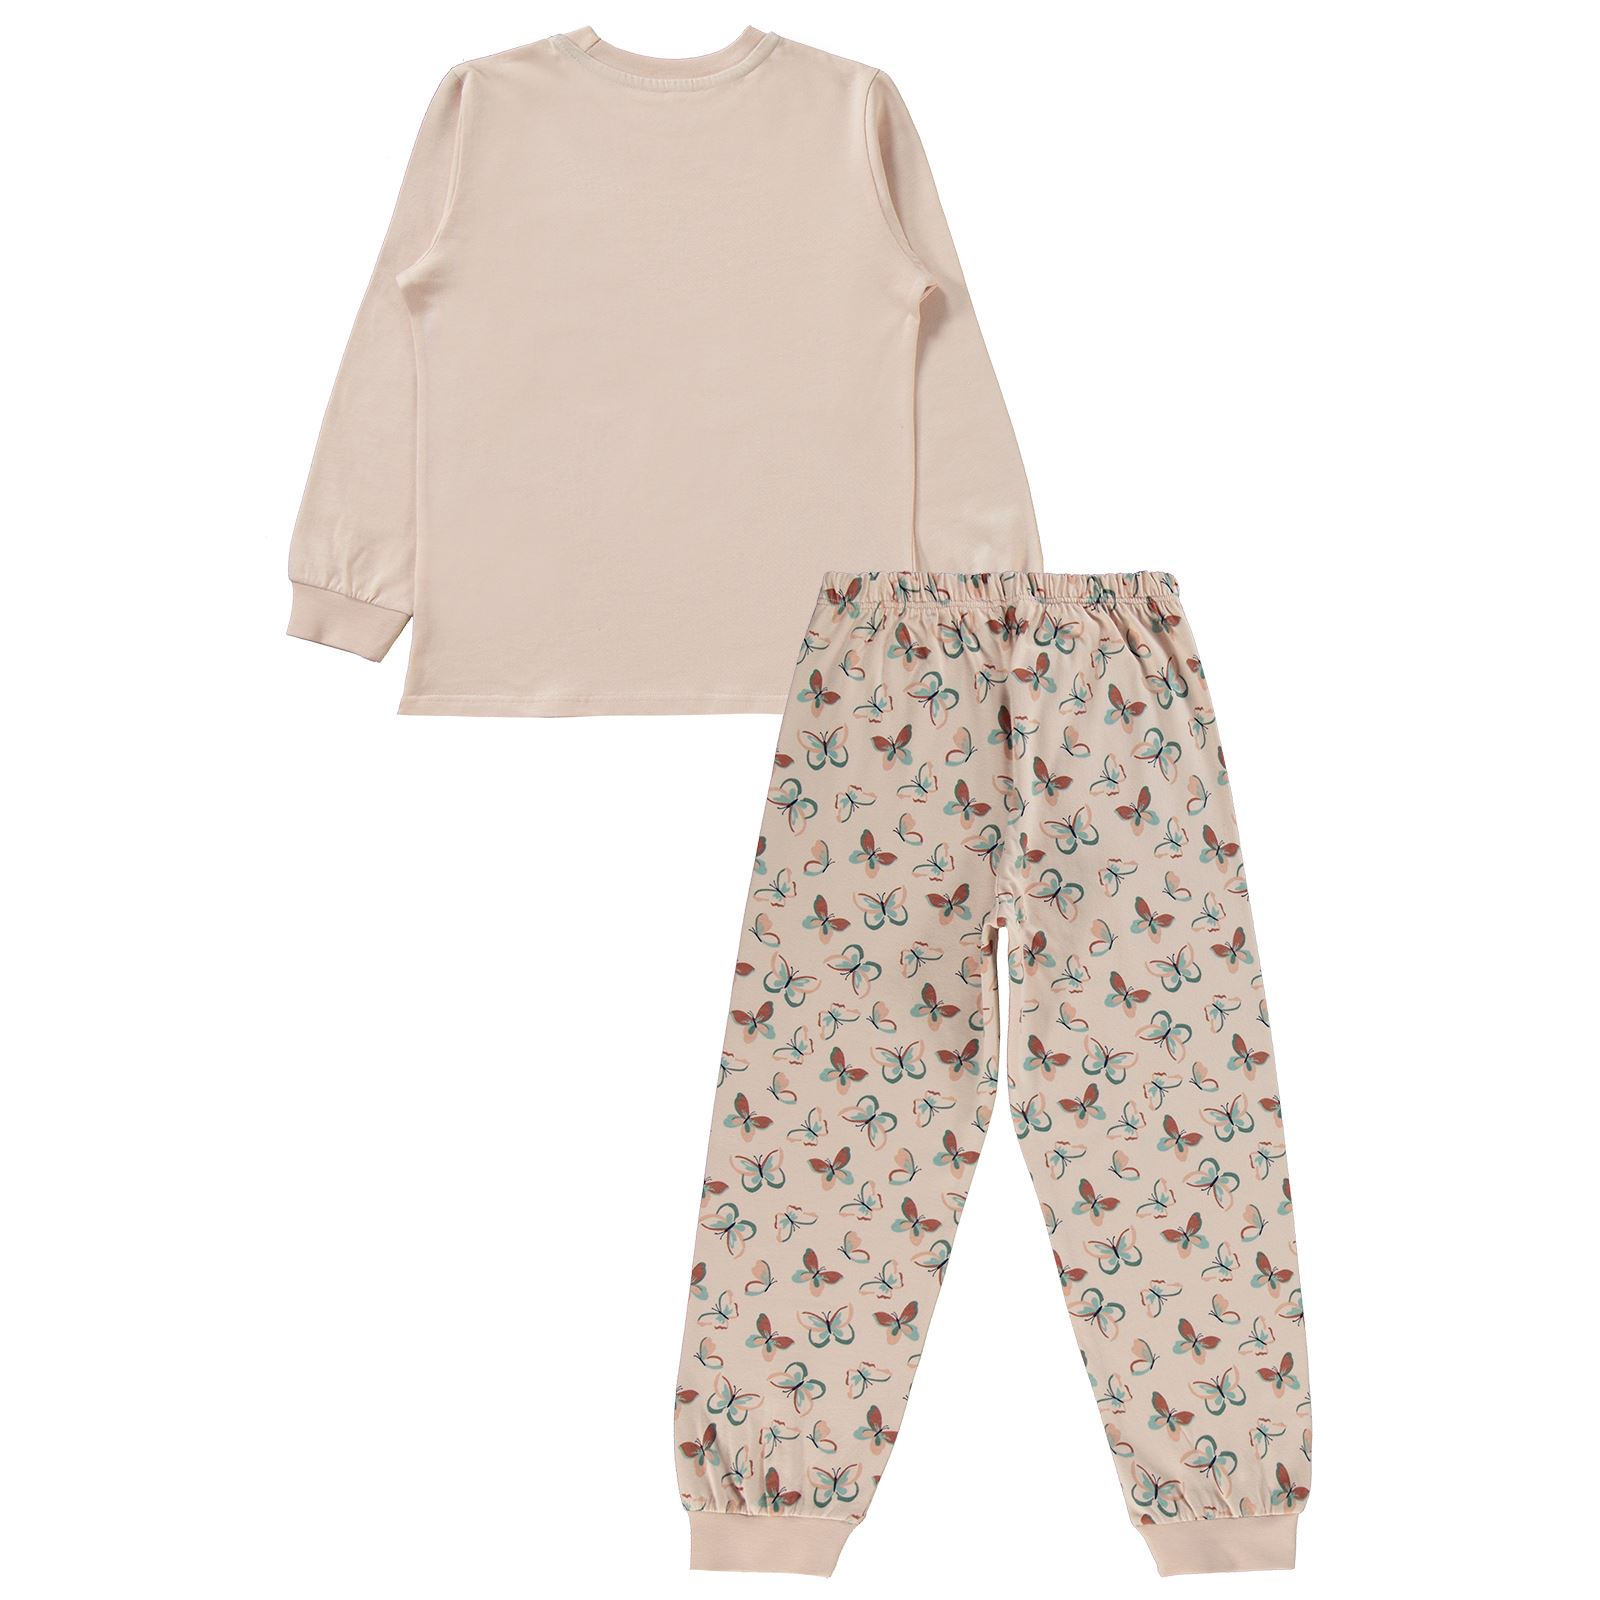 Civil Girls Kız Çocuk Pijama Takımı 6-9 Yaş Pembe Kil